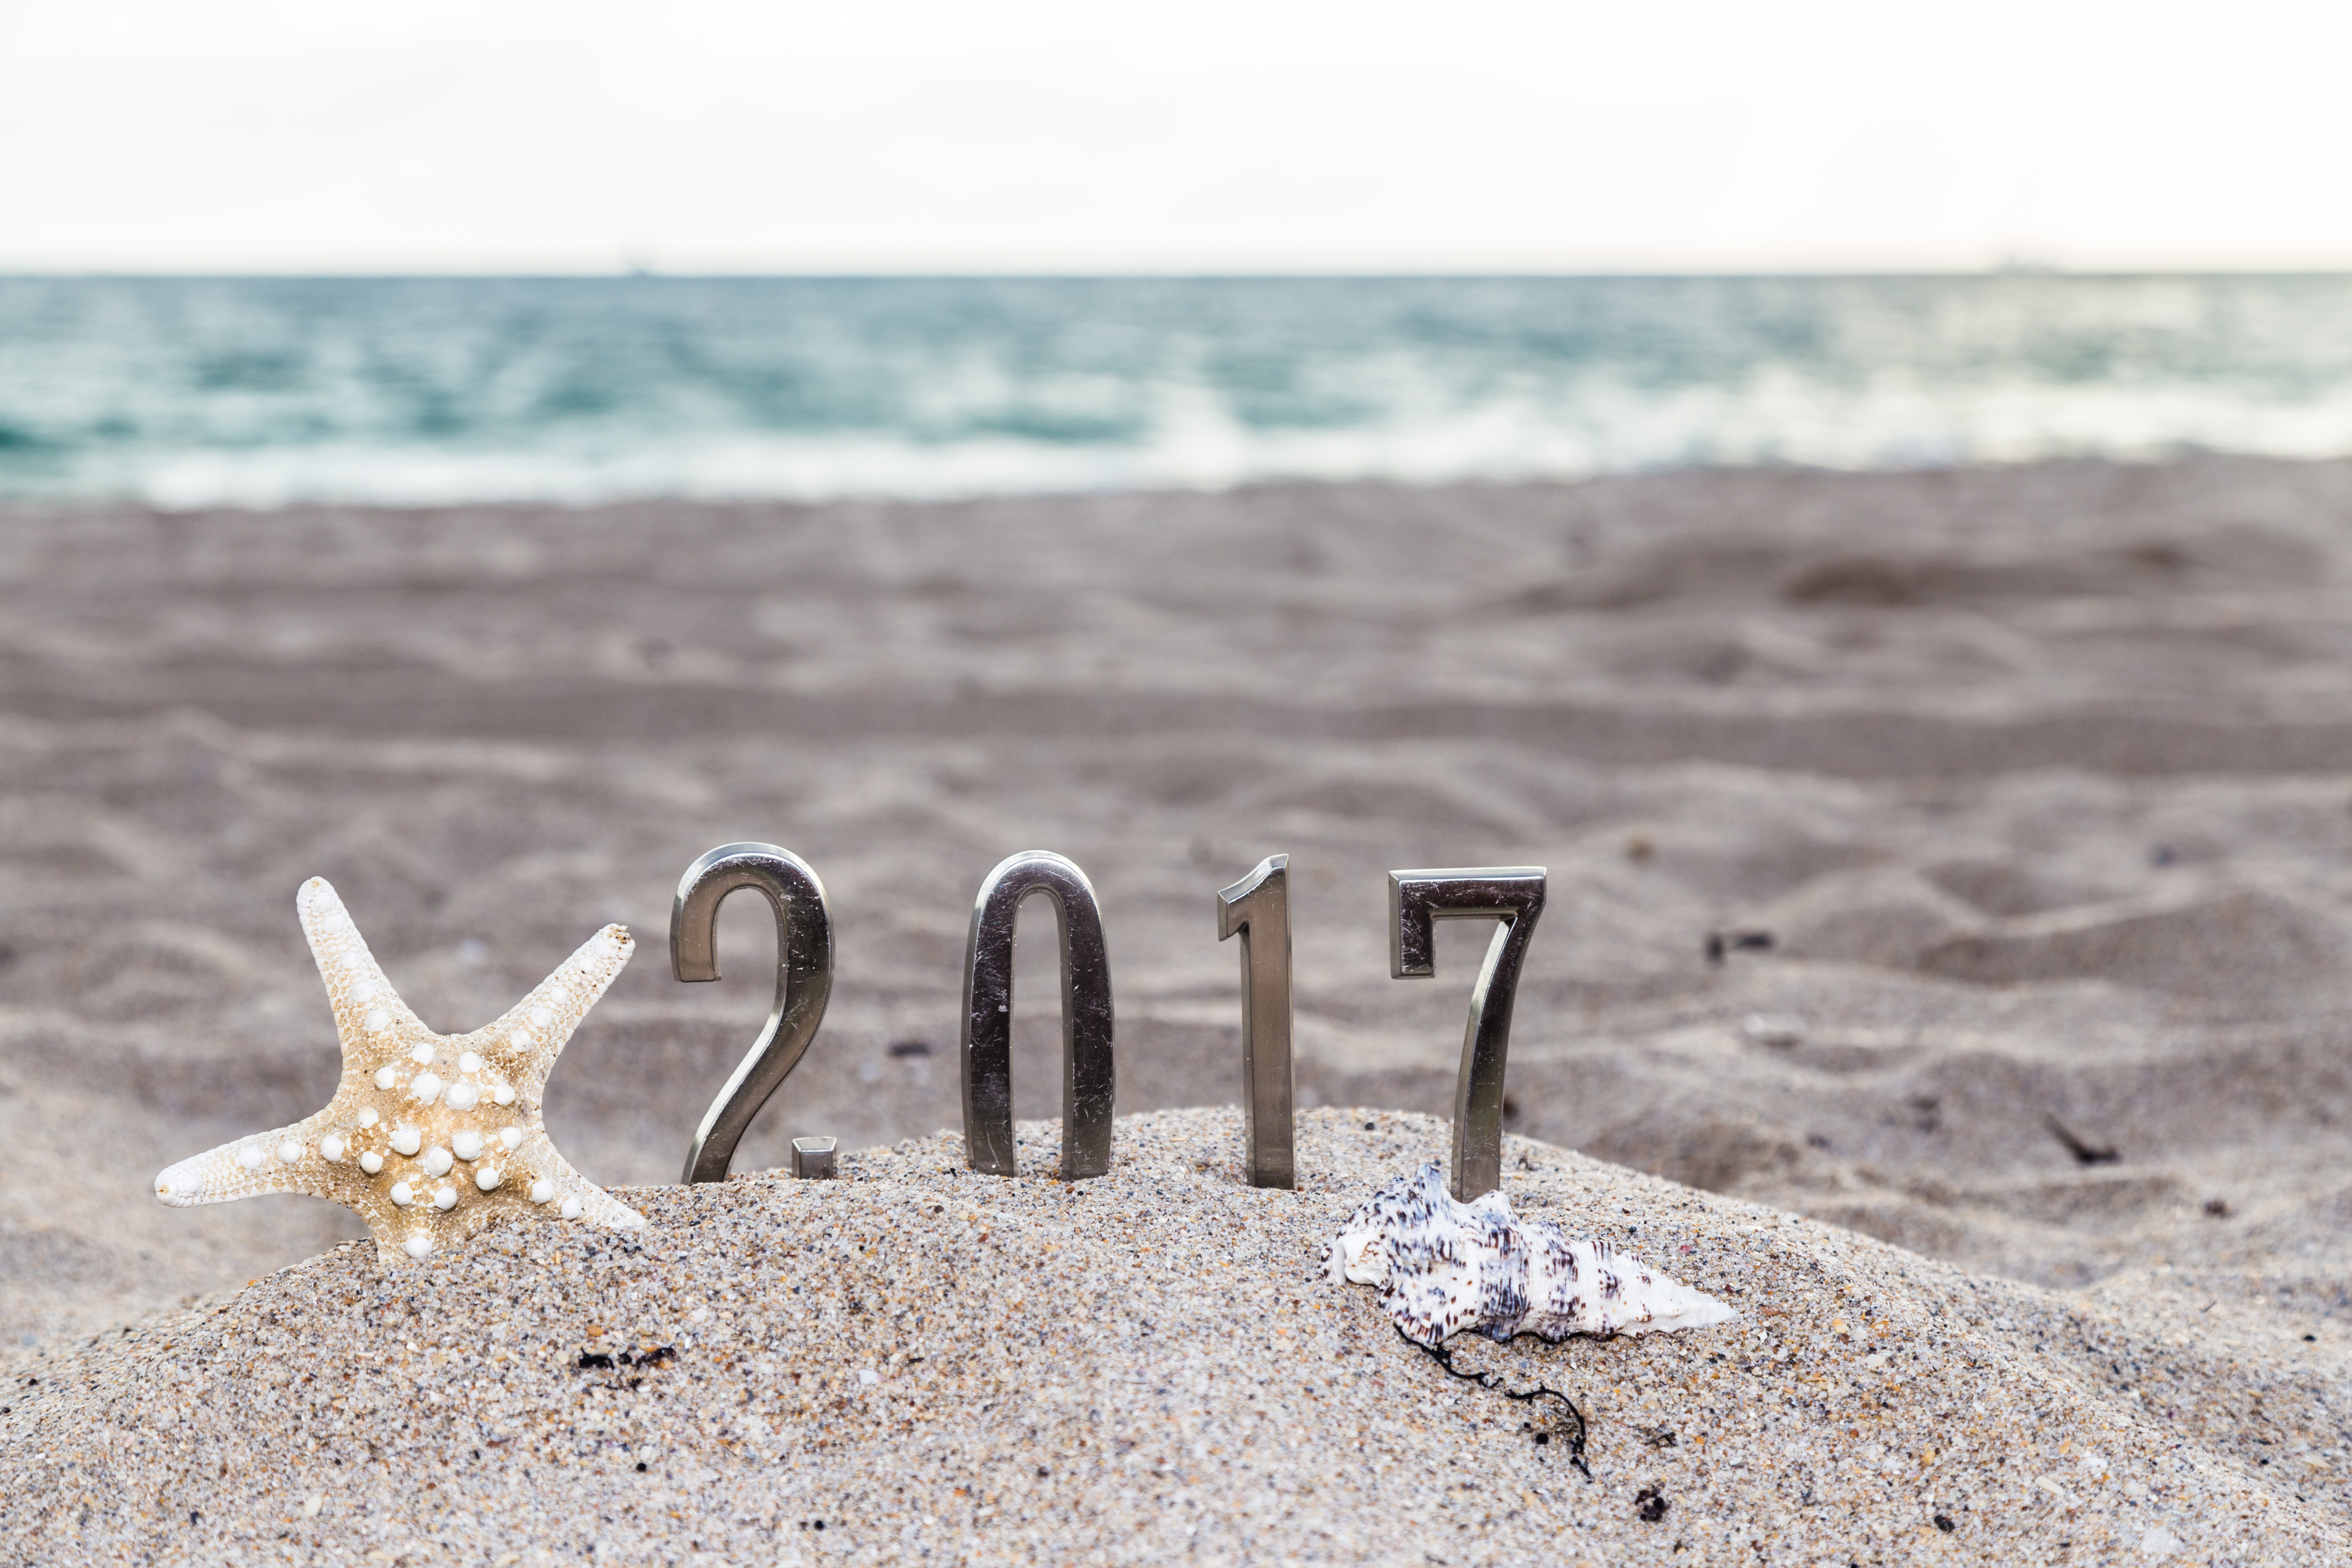 2017 metal number and shellfish/2017 year metal sign and shellfish at tropical beach.